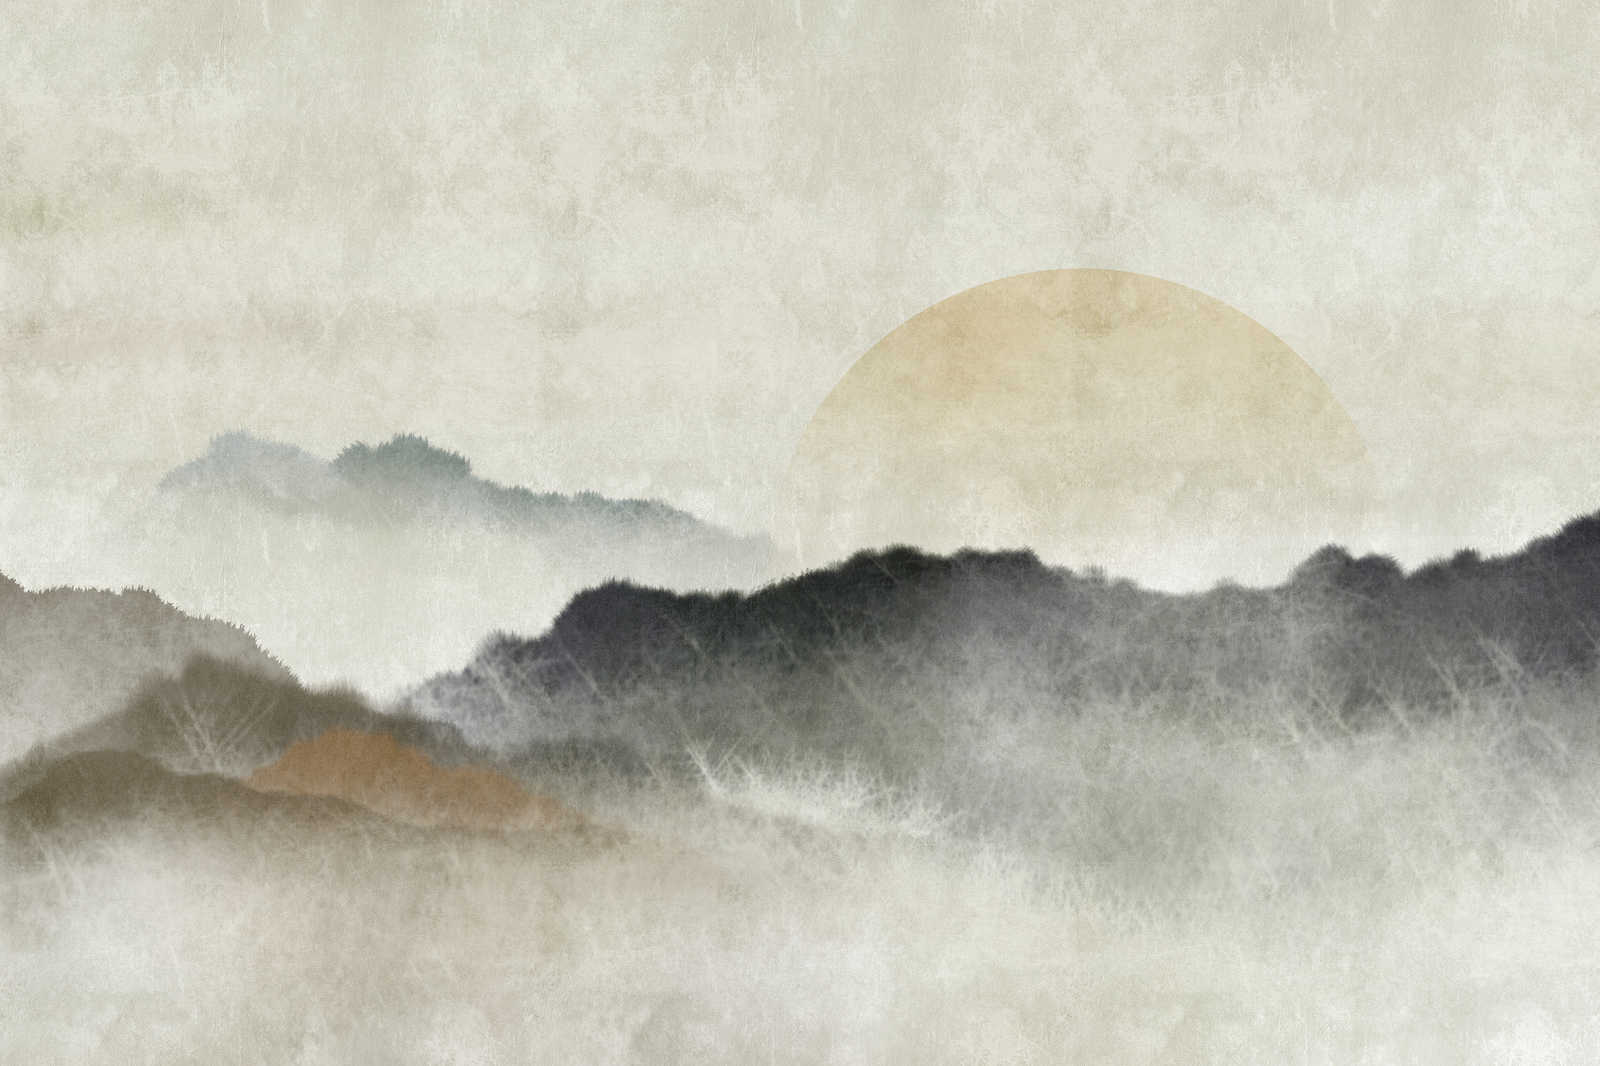             Akaishi 1 - Leinwandbild Asian Print Bergkette im Morgengrauen – 1,20 m x 0,80 m
        